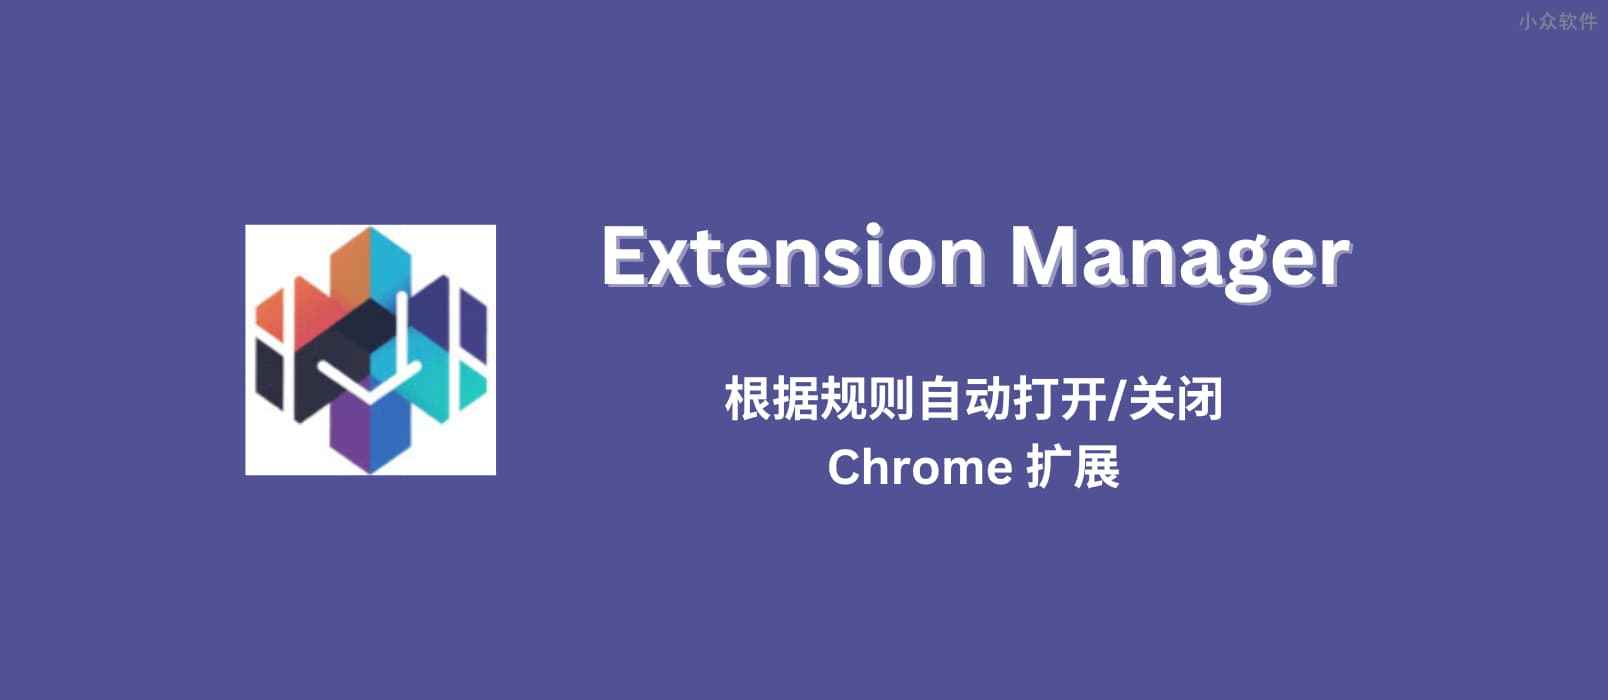 Extension Manager – 根据规则自动打开/关闭 Chrome 扩展